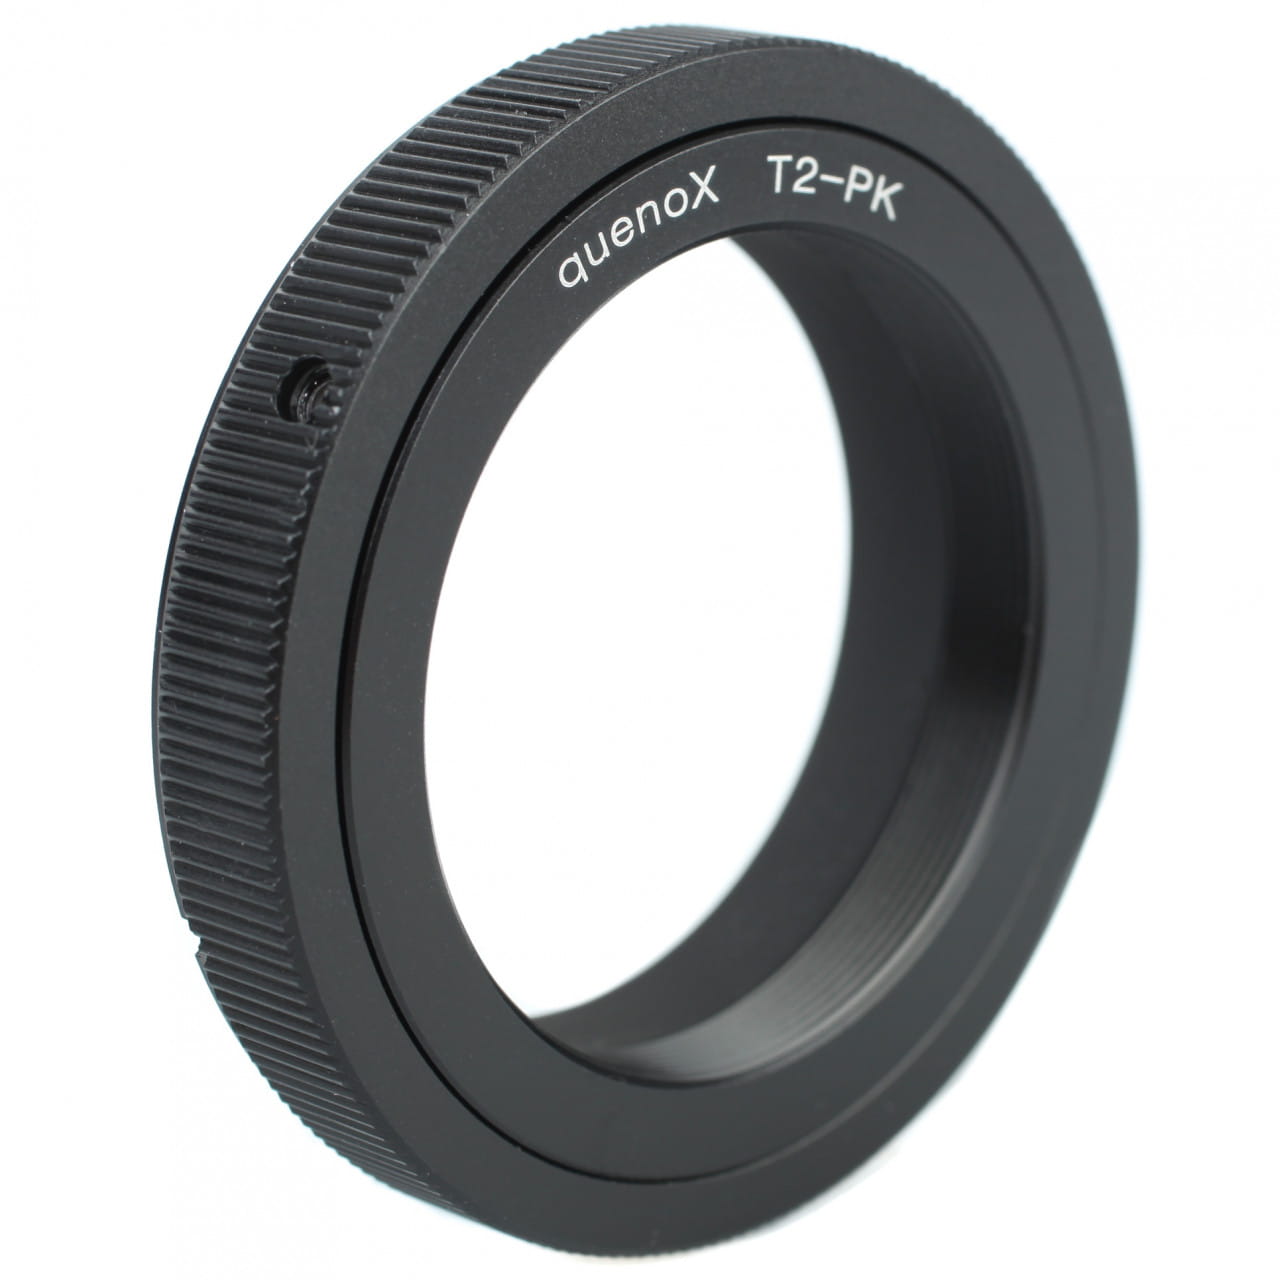 Quenox Adapter für T2-Objektiv/Zubehör an Pentax-K-Kamera T2-PK